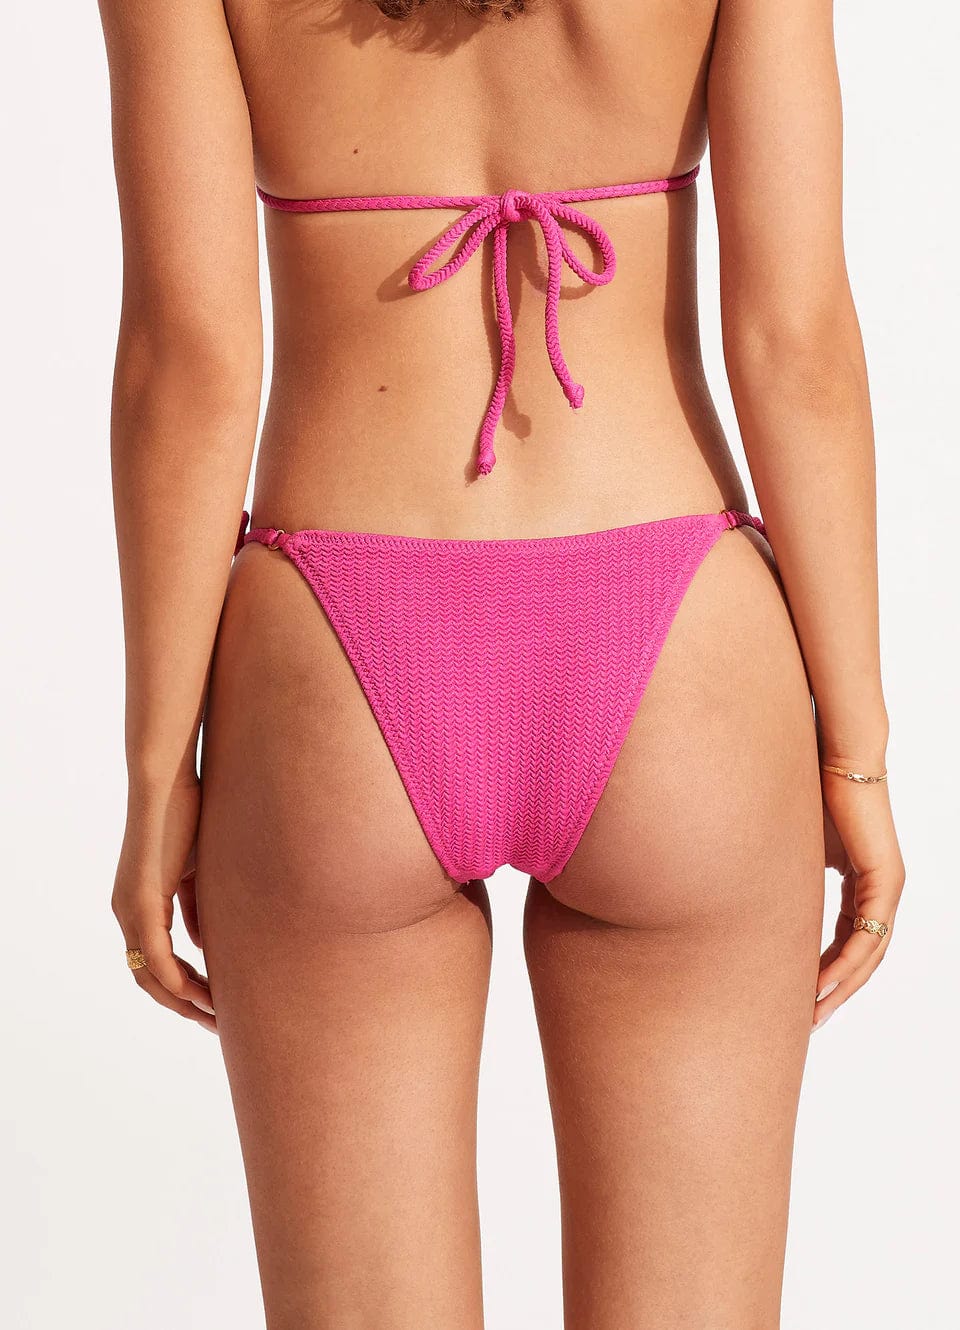 Sea Dive Tie Side Rio Pant - Fuchsia Rose - Seafolly - Splash Swimwear  - bikini bottoms, June23, Seafolly, Womens, womens swim - Splash Swimwear 